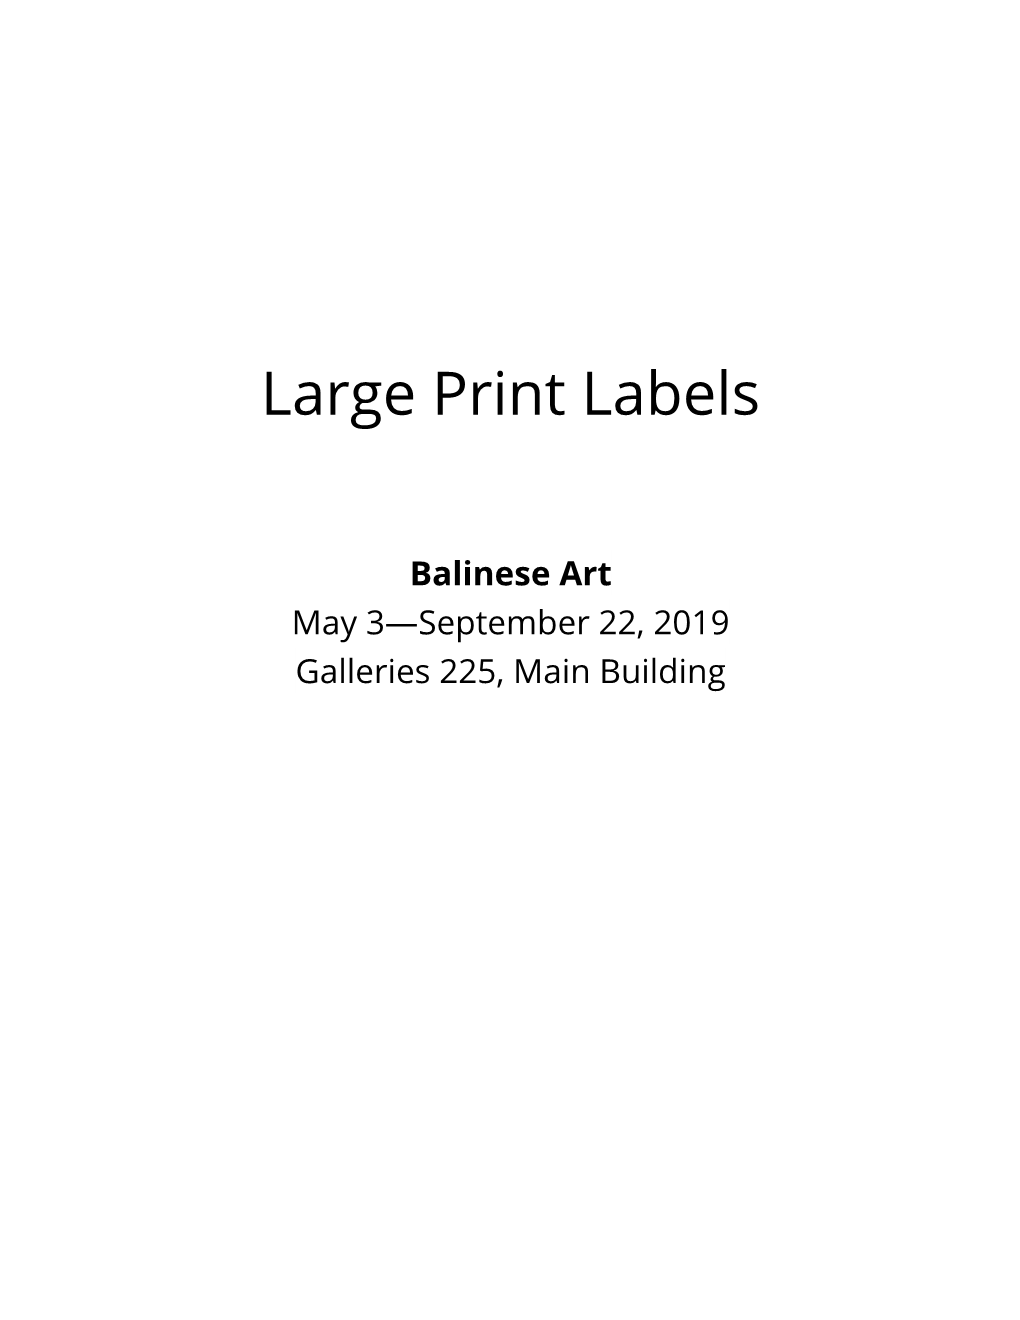 Balinese Art May 3—September 22, 2019 Galleries 225, Main Building